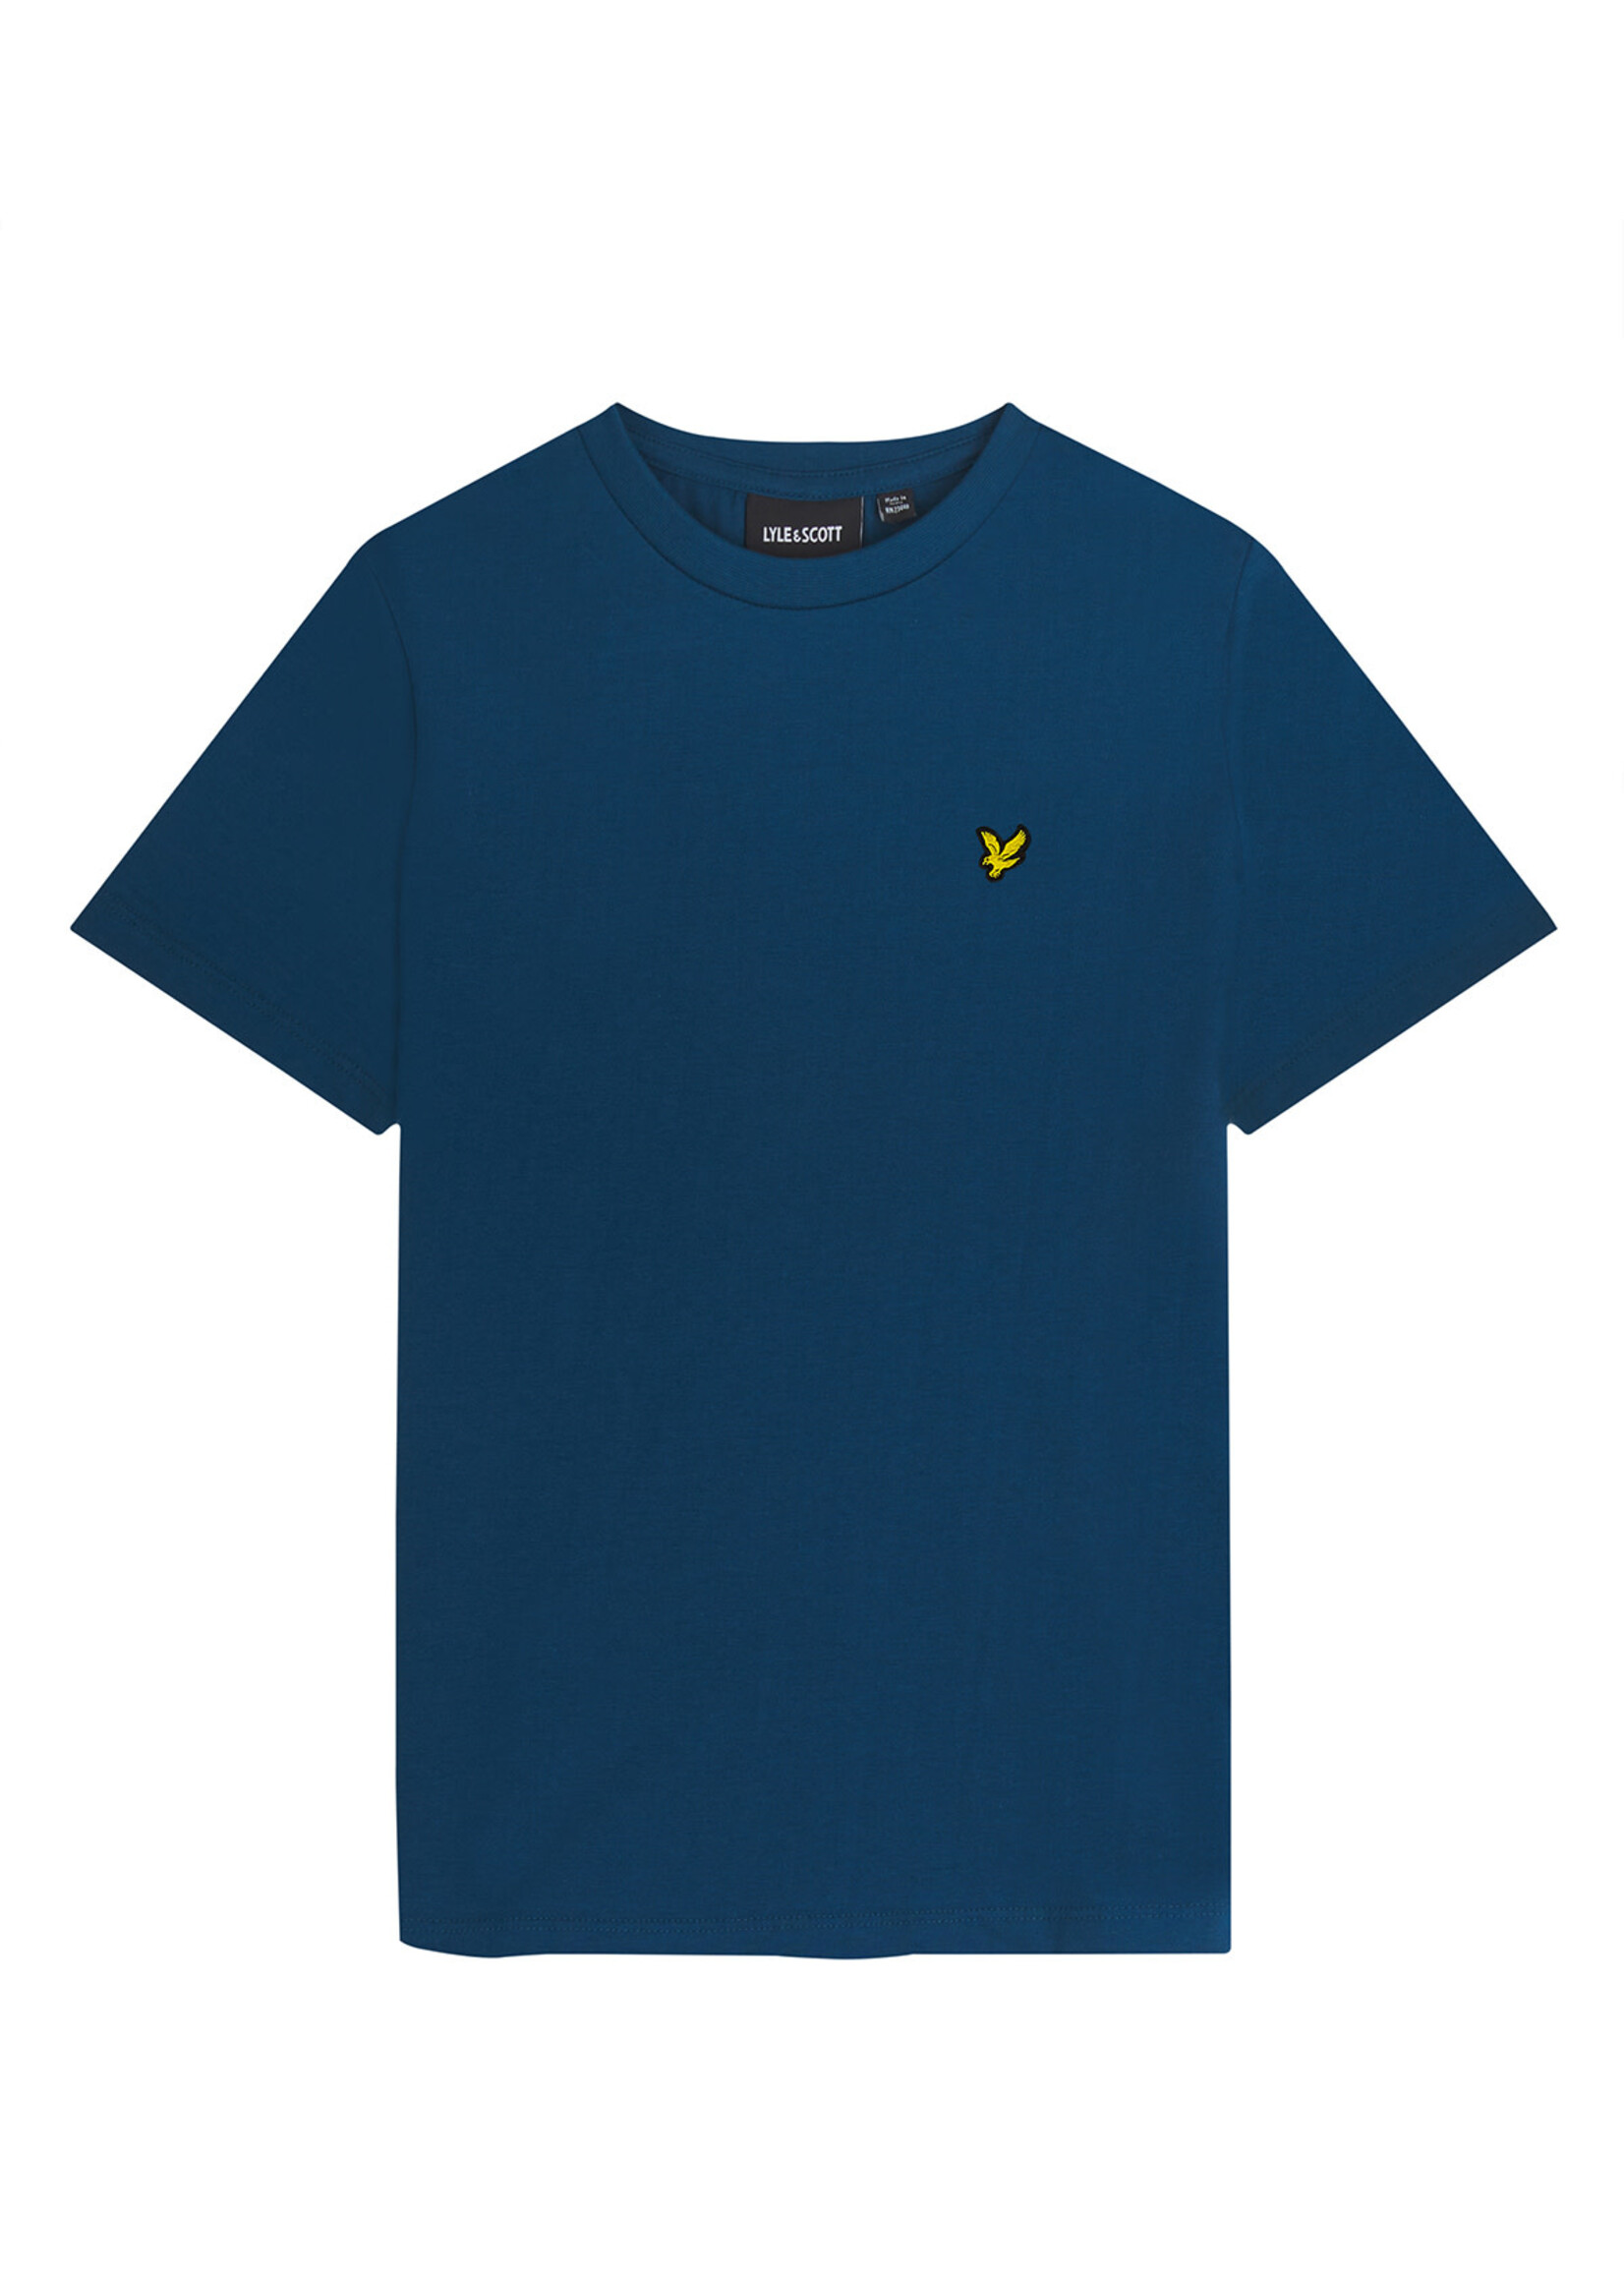 Lyle&Scott Lyle&Scott Plain T-shirt W992 Apres Navy - TSB2000V